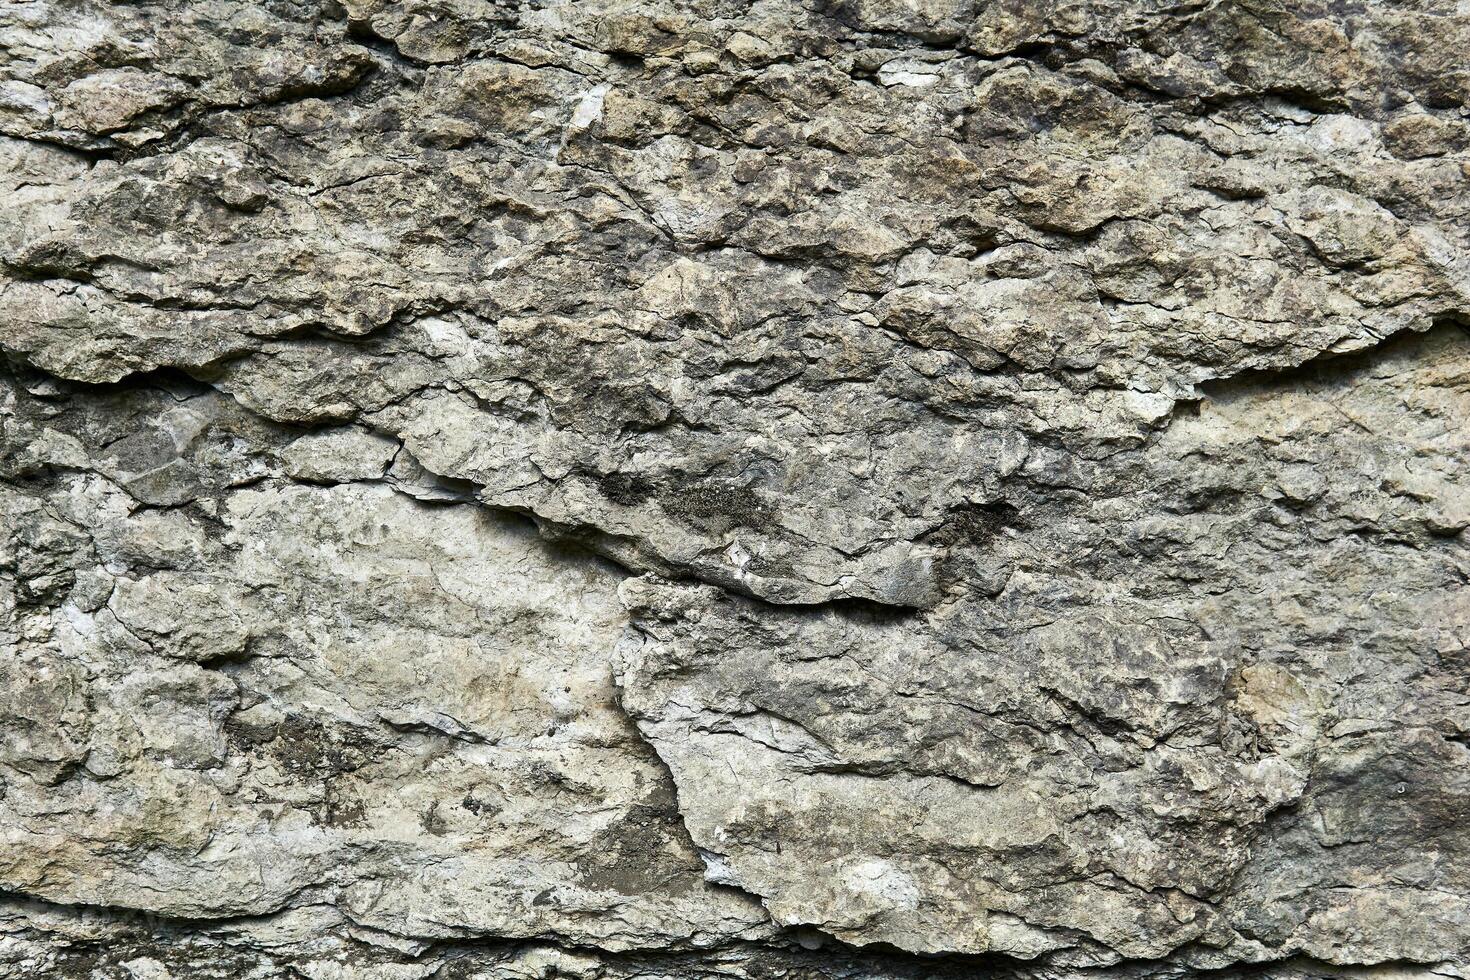 fondo, textura - áspero gris caliza rock foto